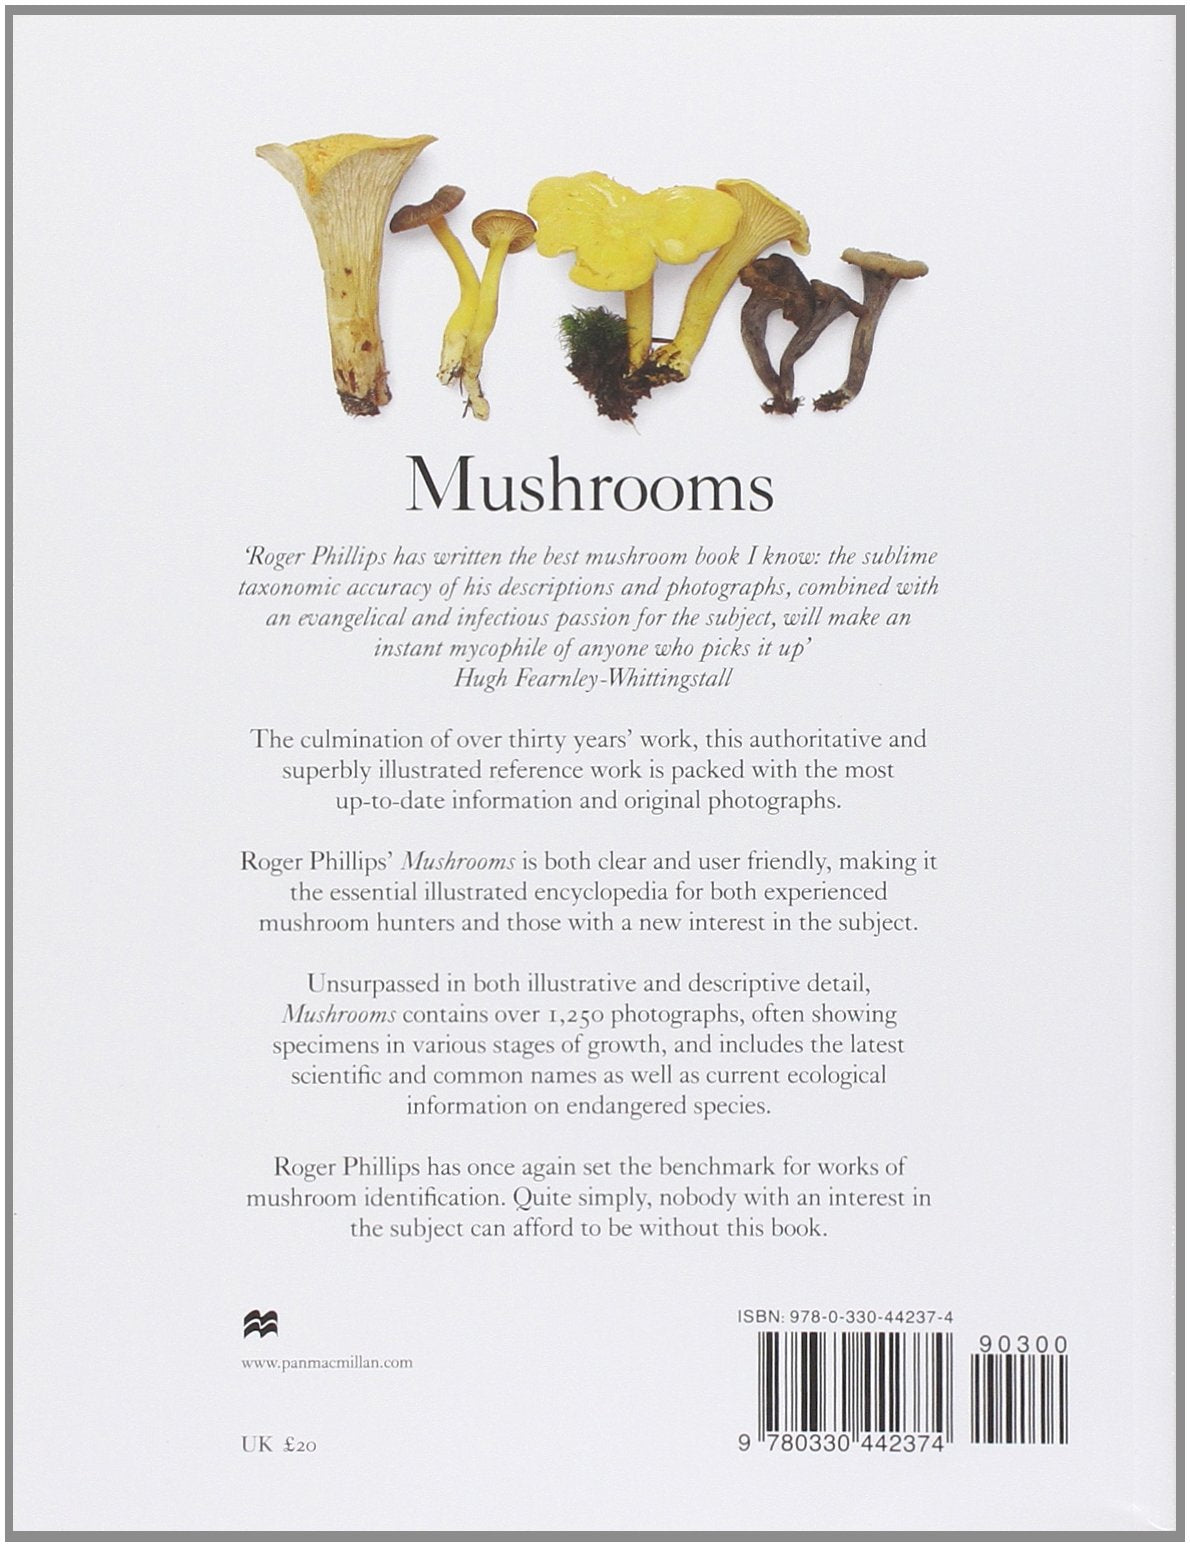 MycoPunks - Mushrooms - Roger Phillips (Paperback) - Book